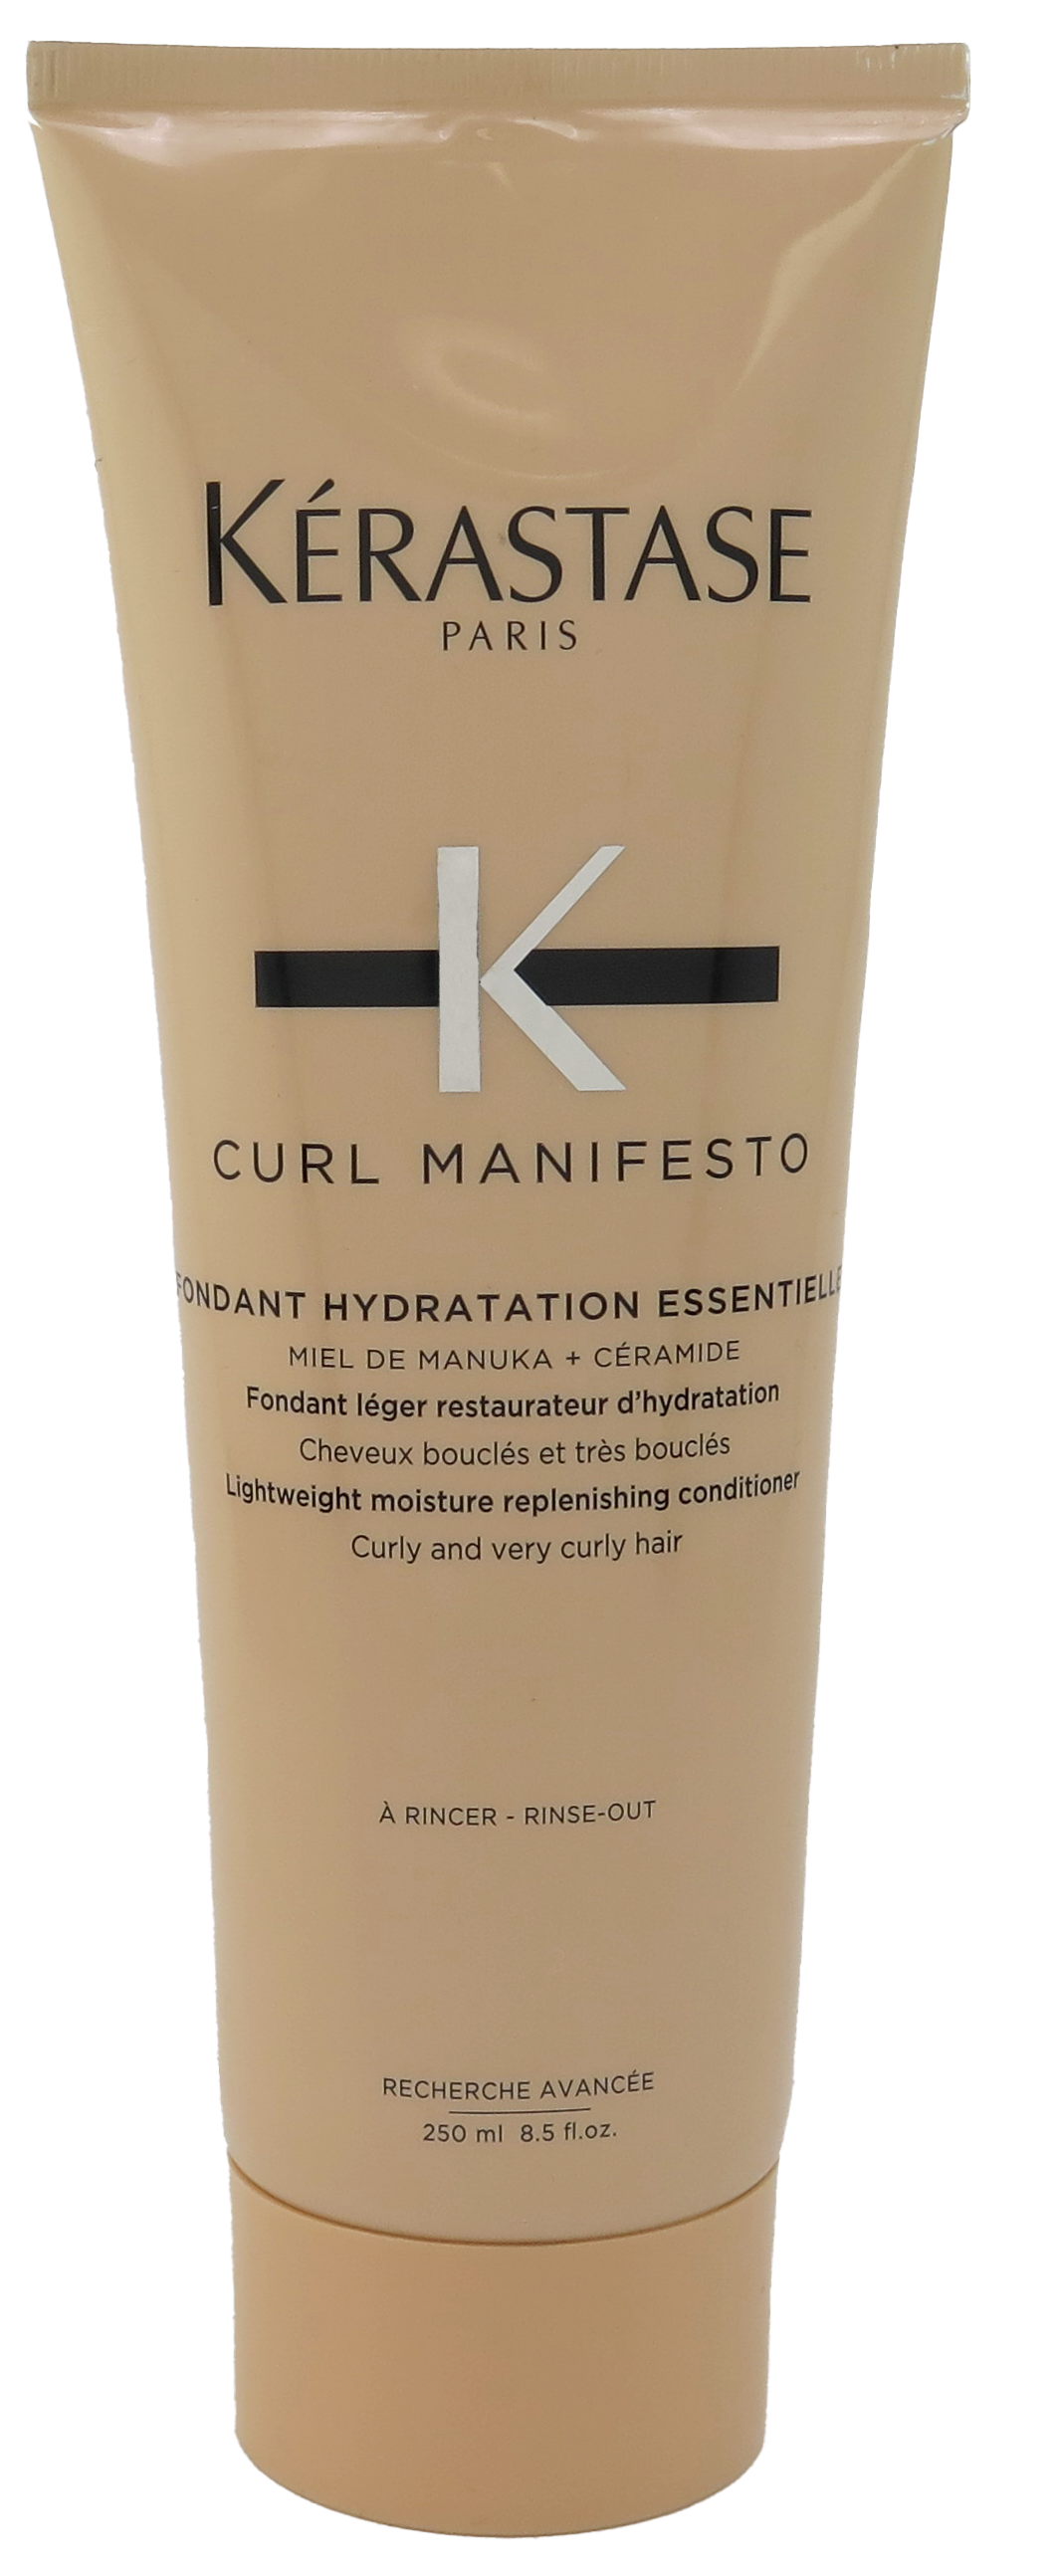 Kerastase Curl Manifesto Fondant Hydratation Essentielle Conditioner 8.5 fl oz